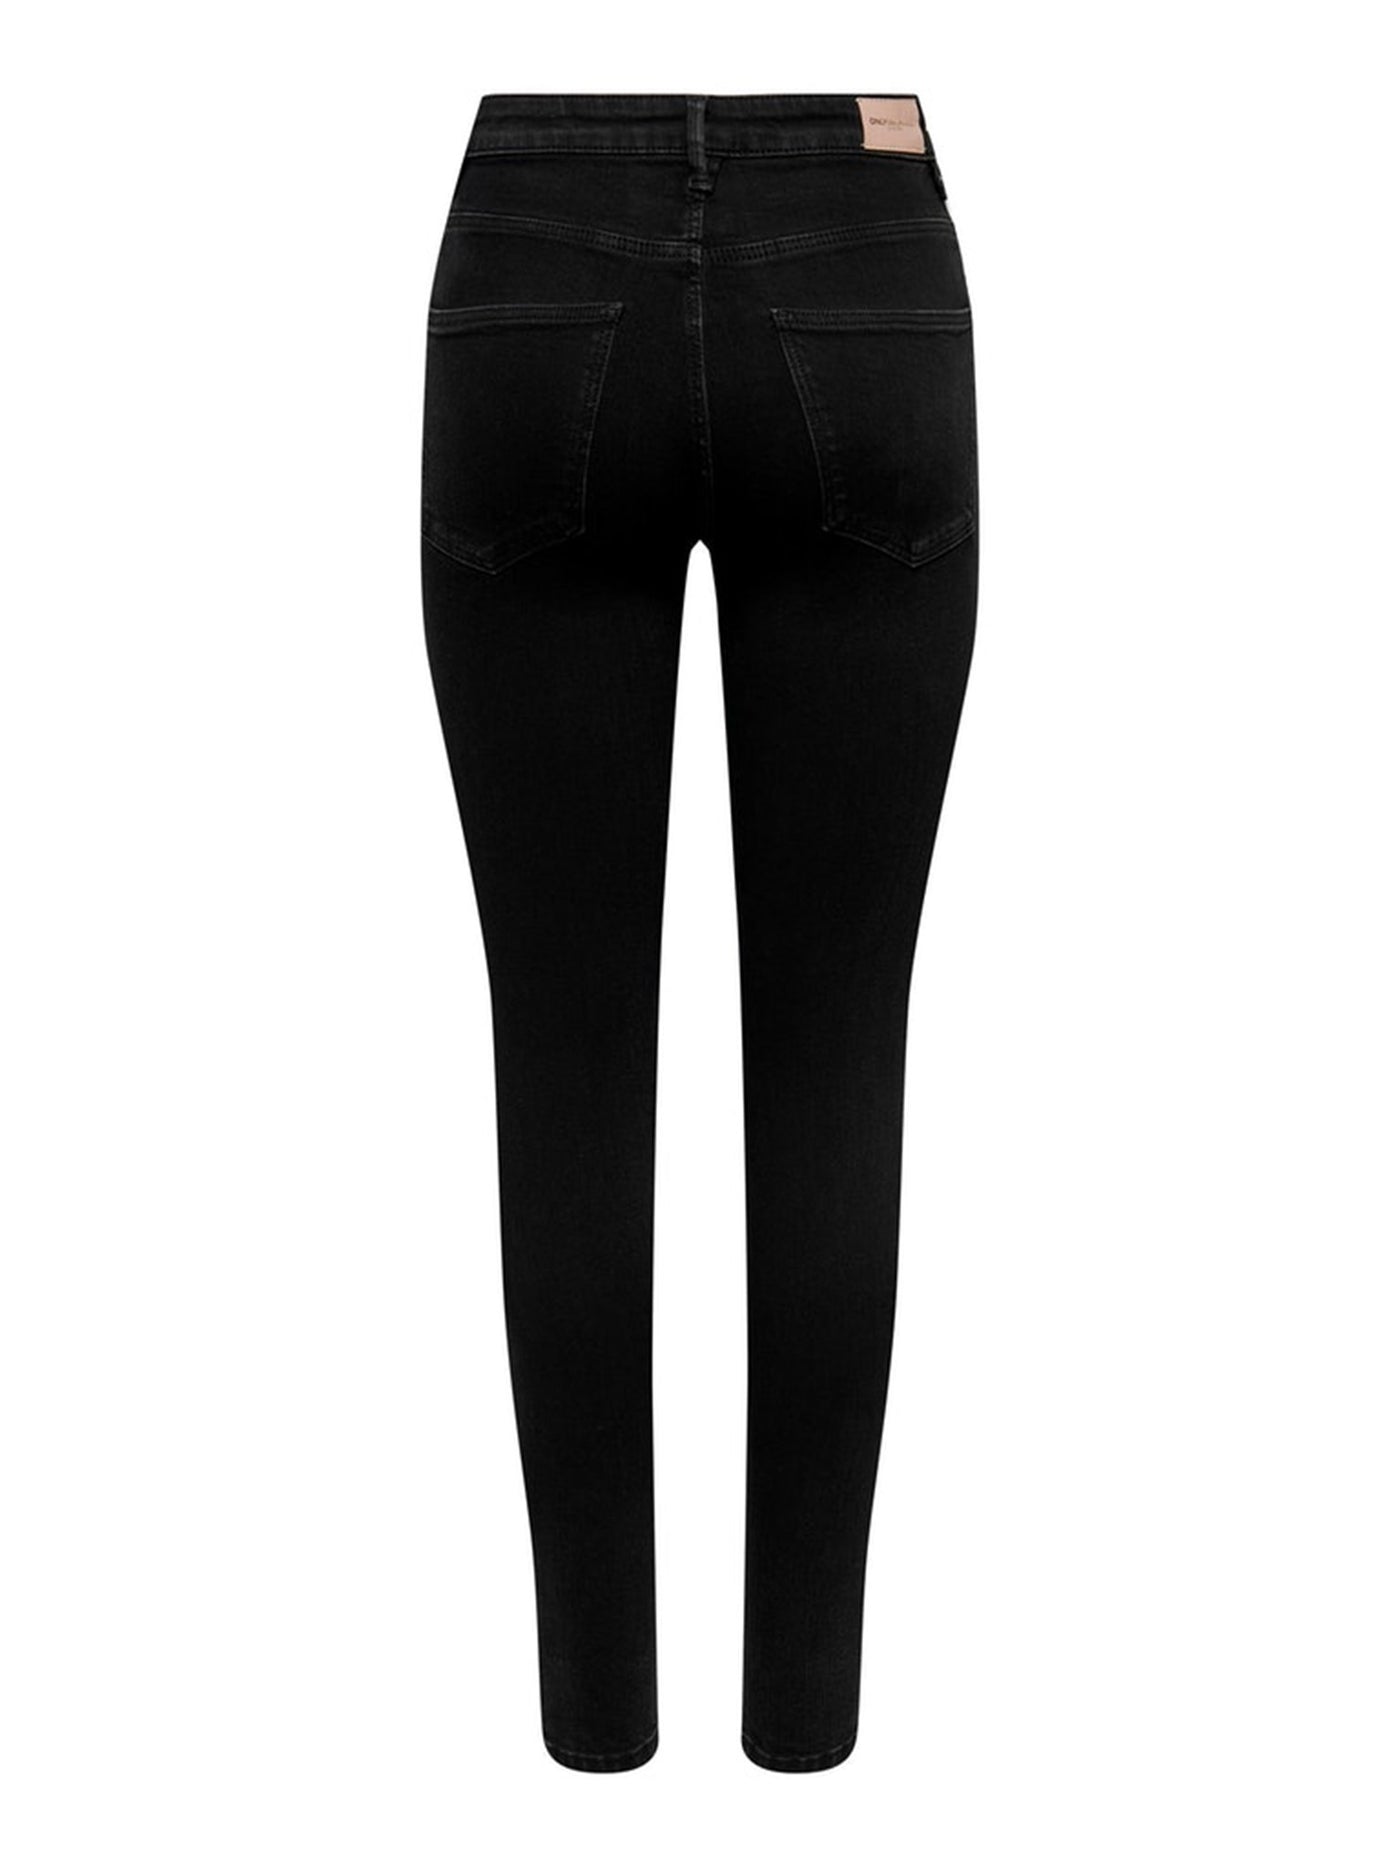 Iconic Highwaist Jeans - Black - ONLY - Black 2